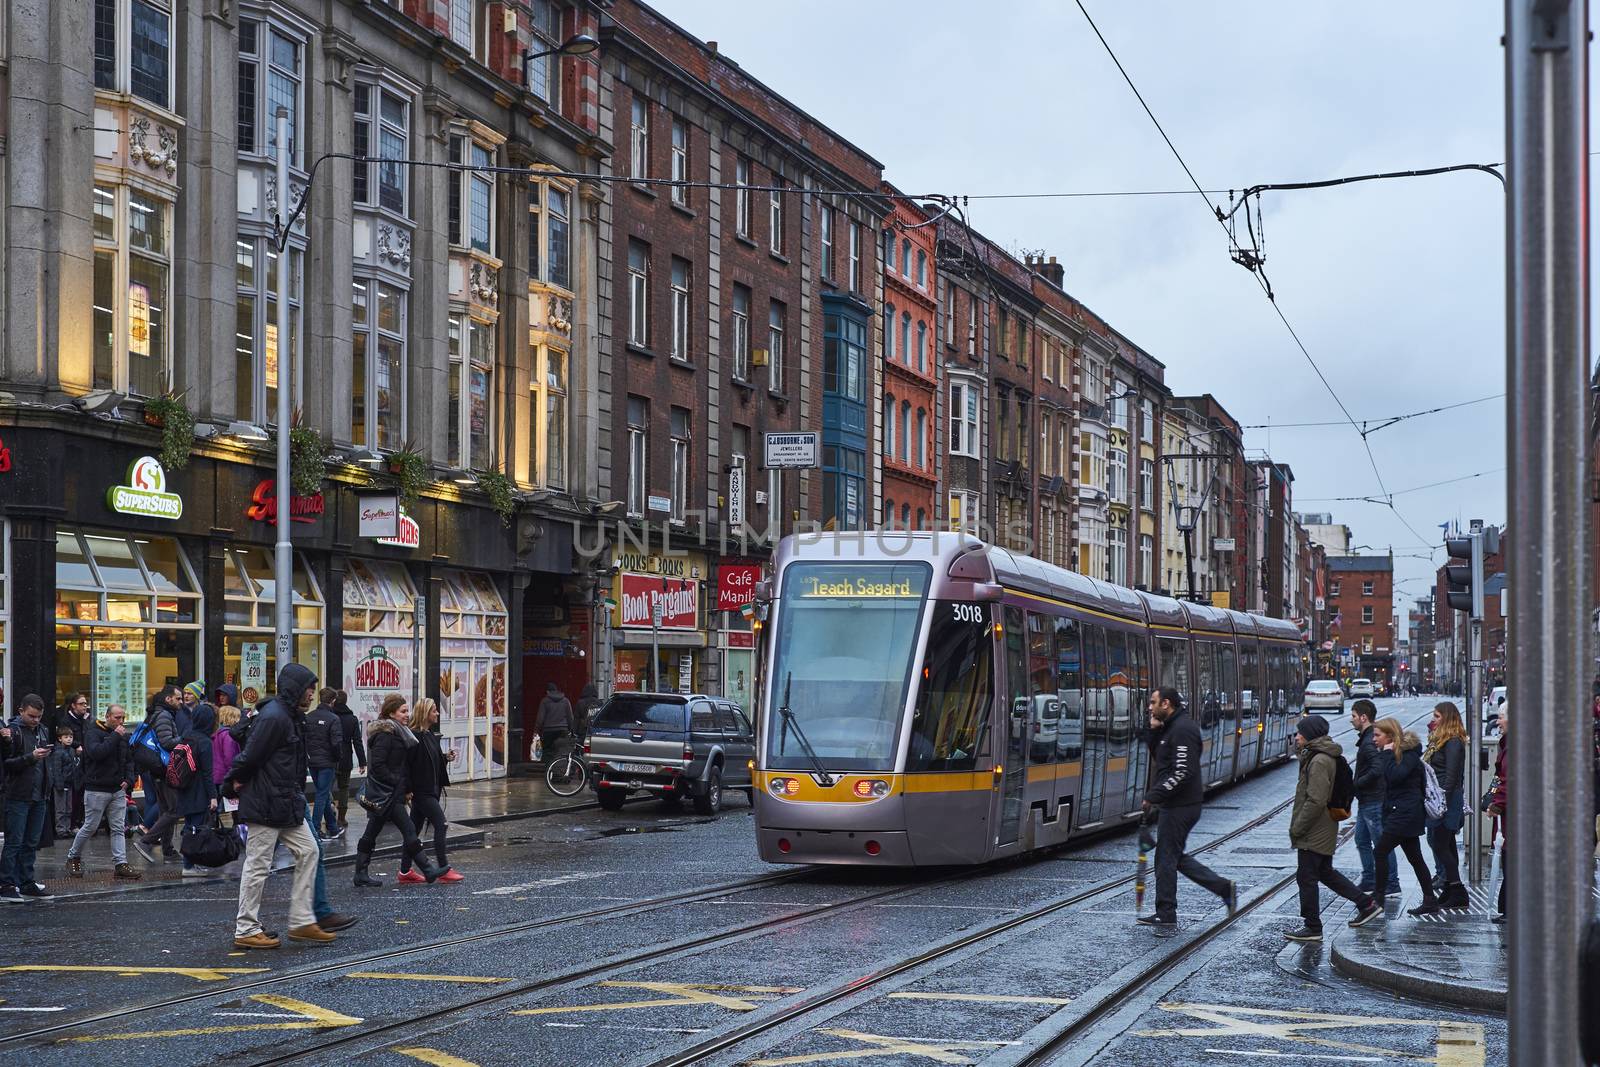 DUBLIN, IRELAND - JANUARY 05: The Luas, Dublin's tram system train, crossing pedestrian area in rainy day. January 05, 2016 in Dublin